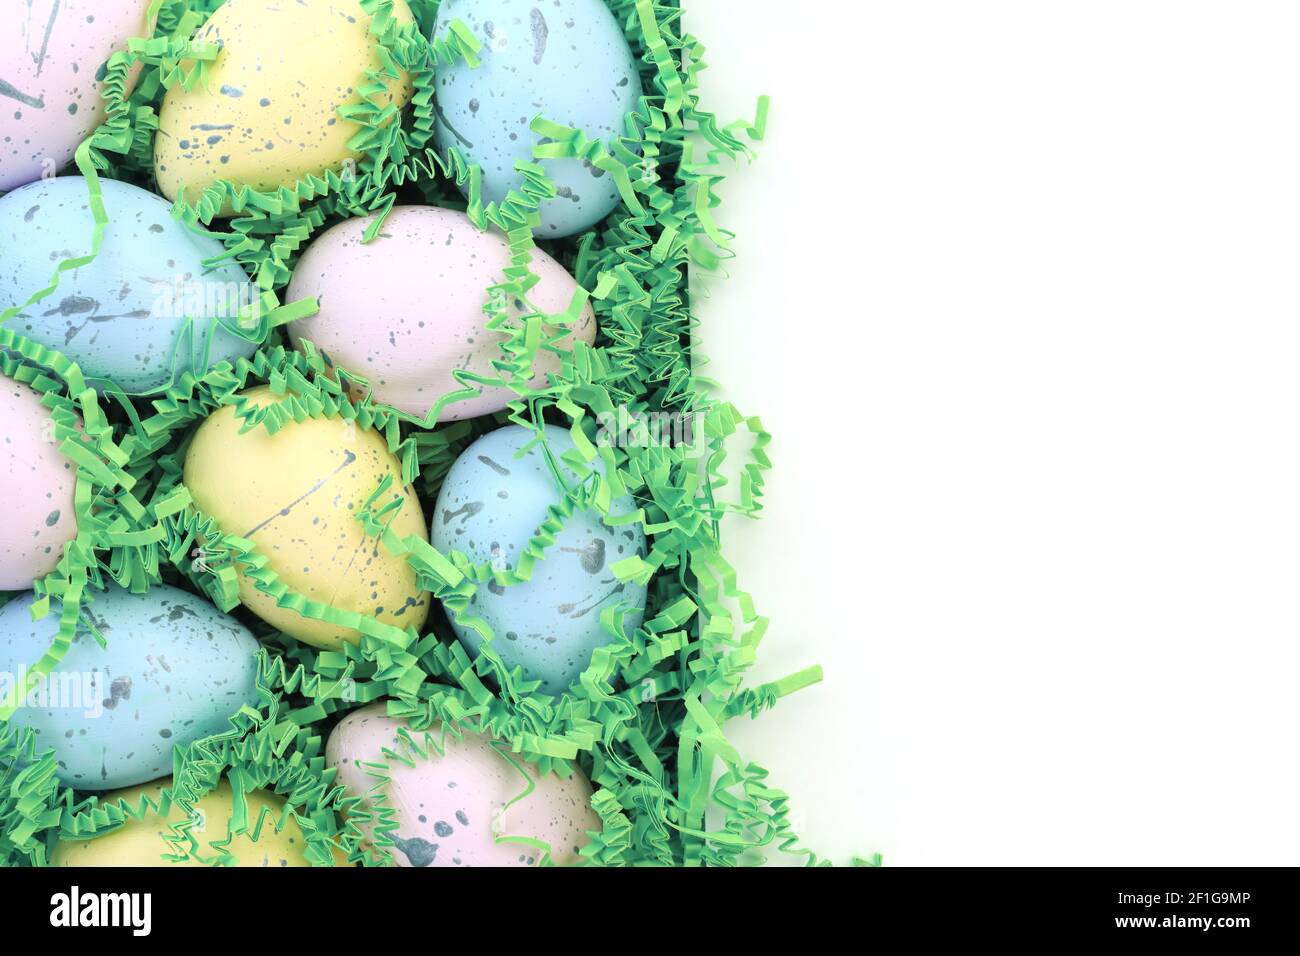 Colección de coloridos huevos de Pascua de fondo con espacios en blanco. Foto de stock